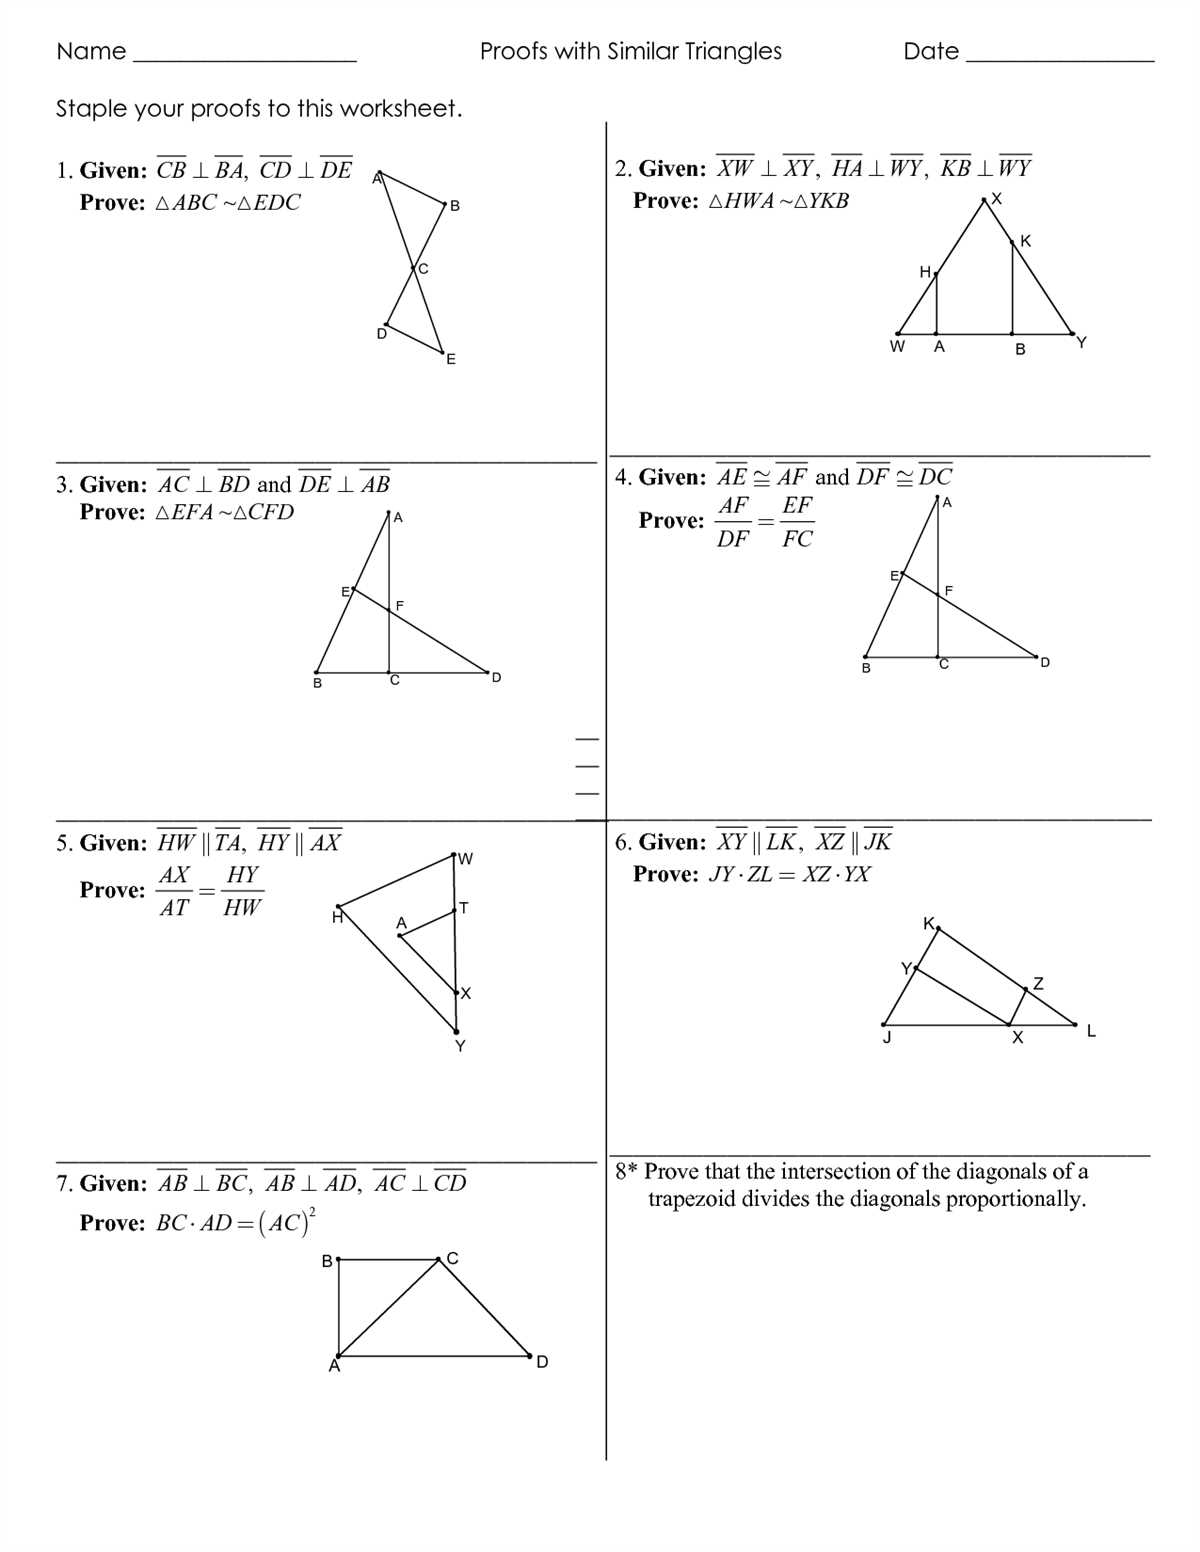 Common Congruent Triangle Proof Techniques